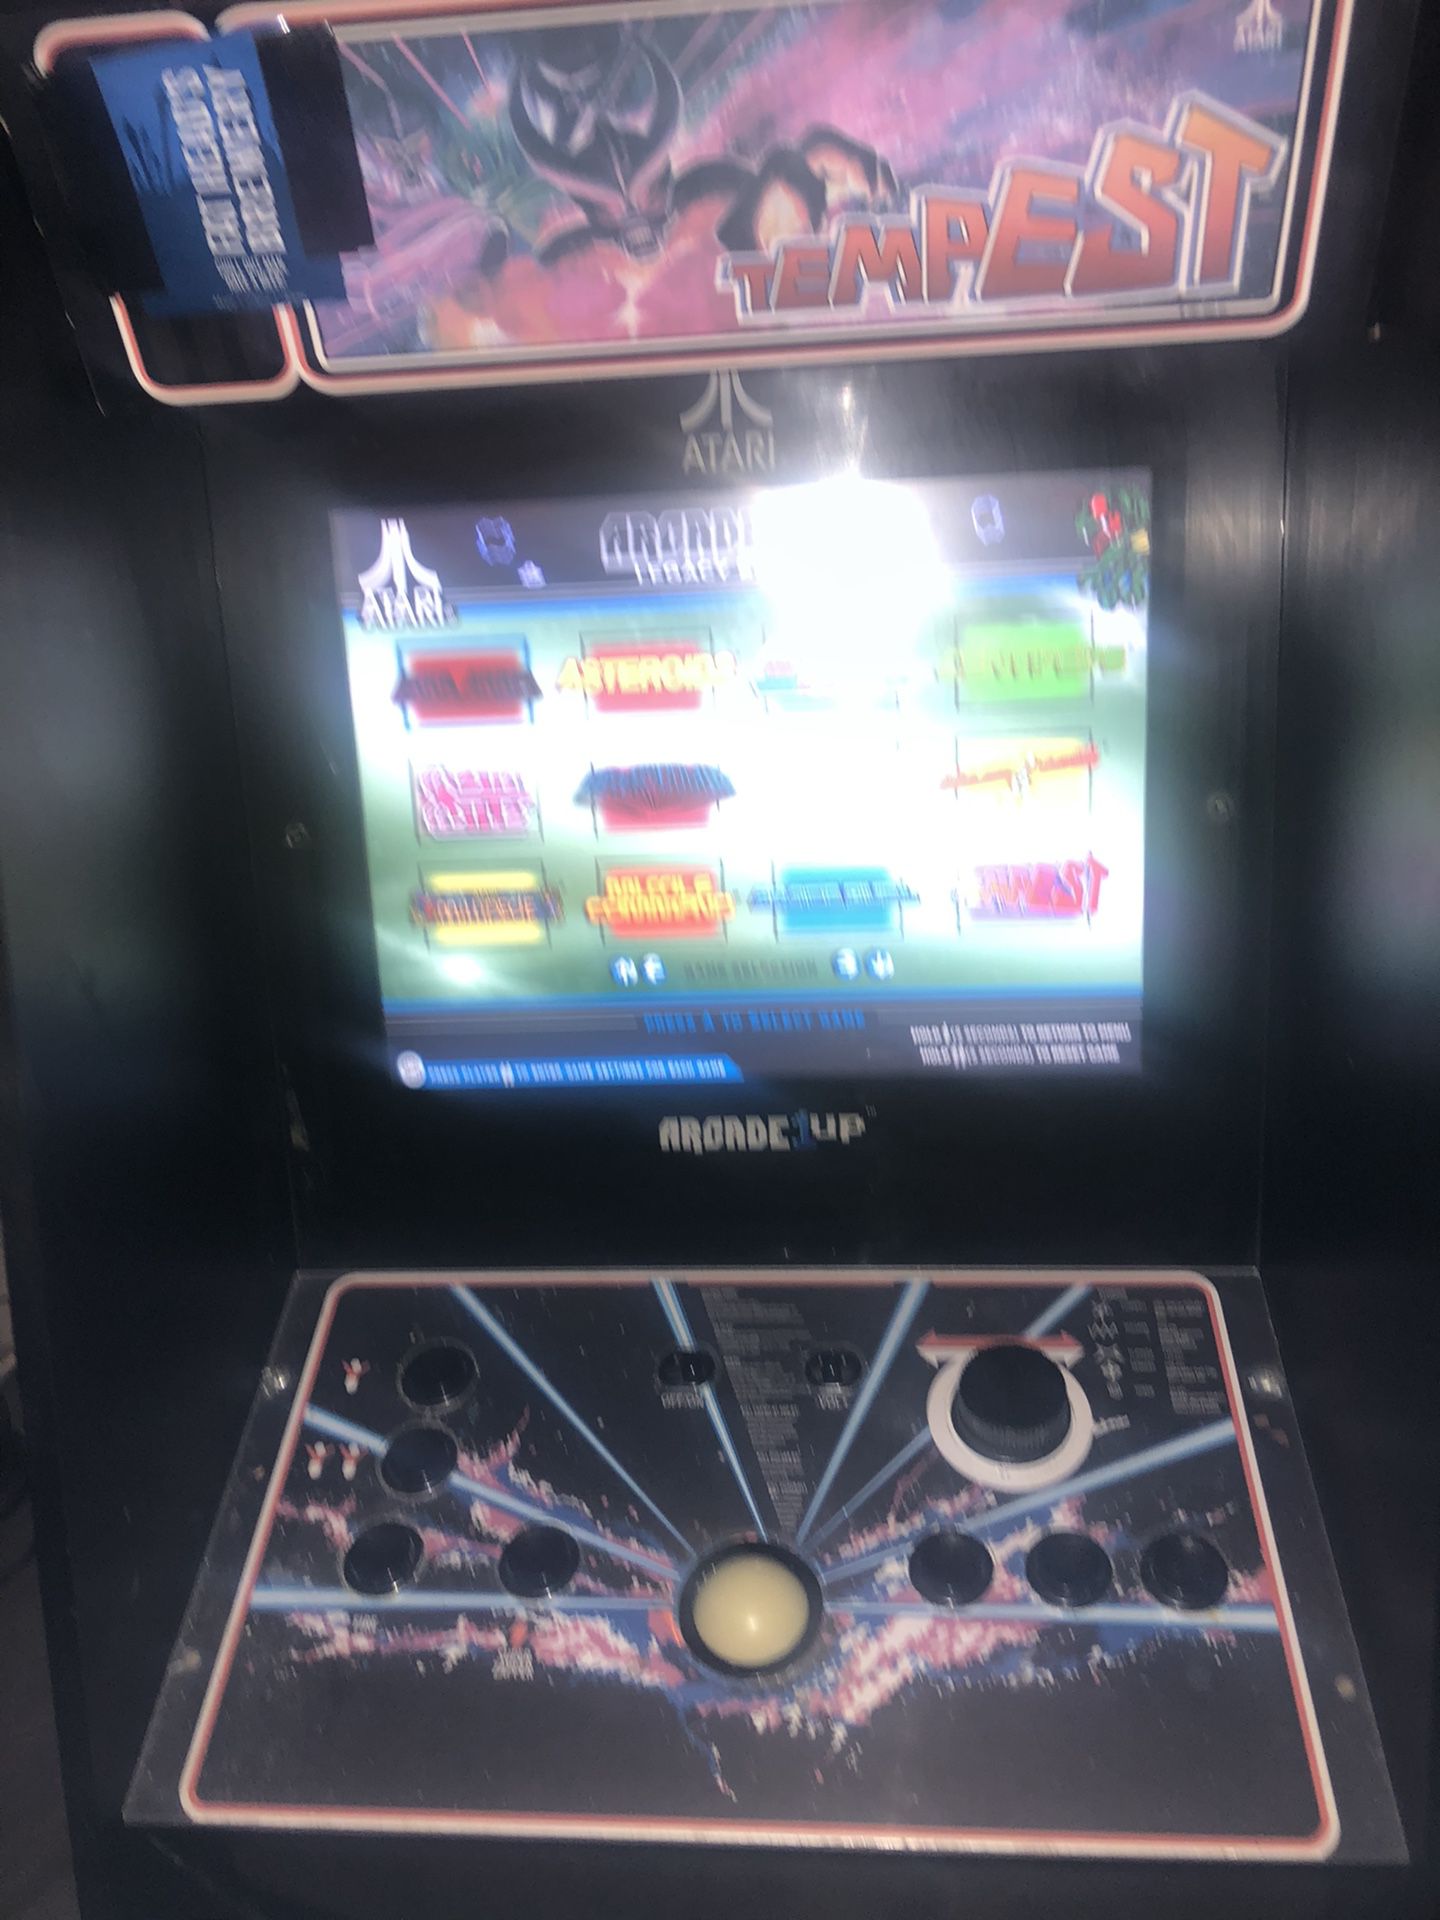 Atari Arcade 